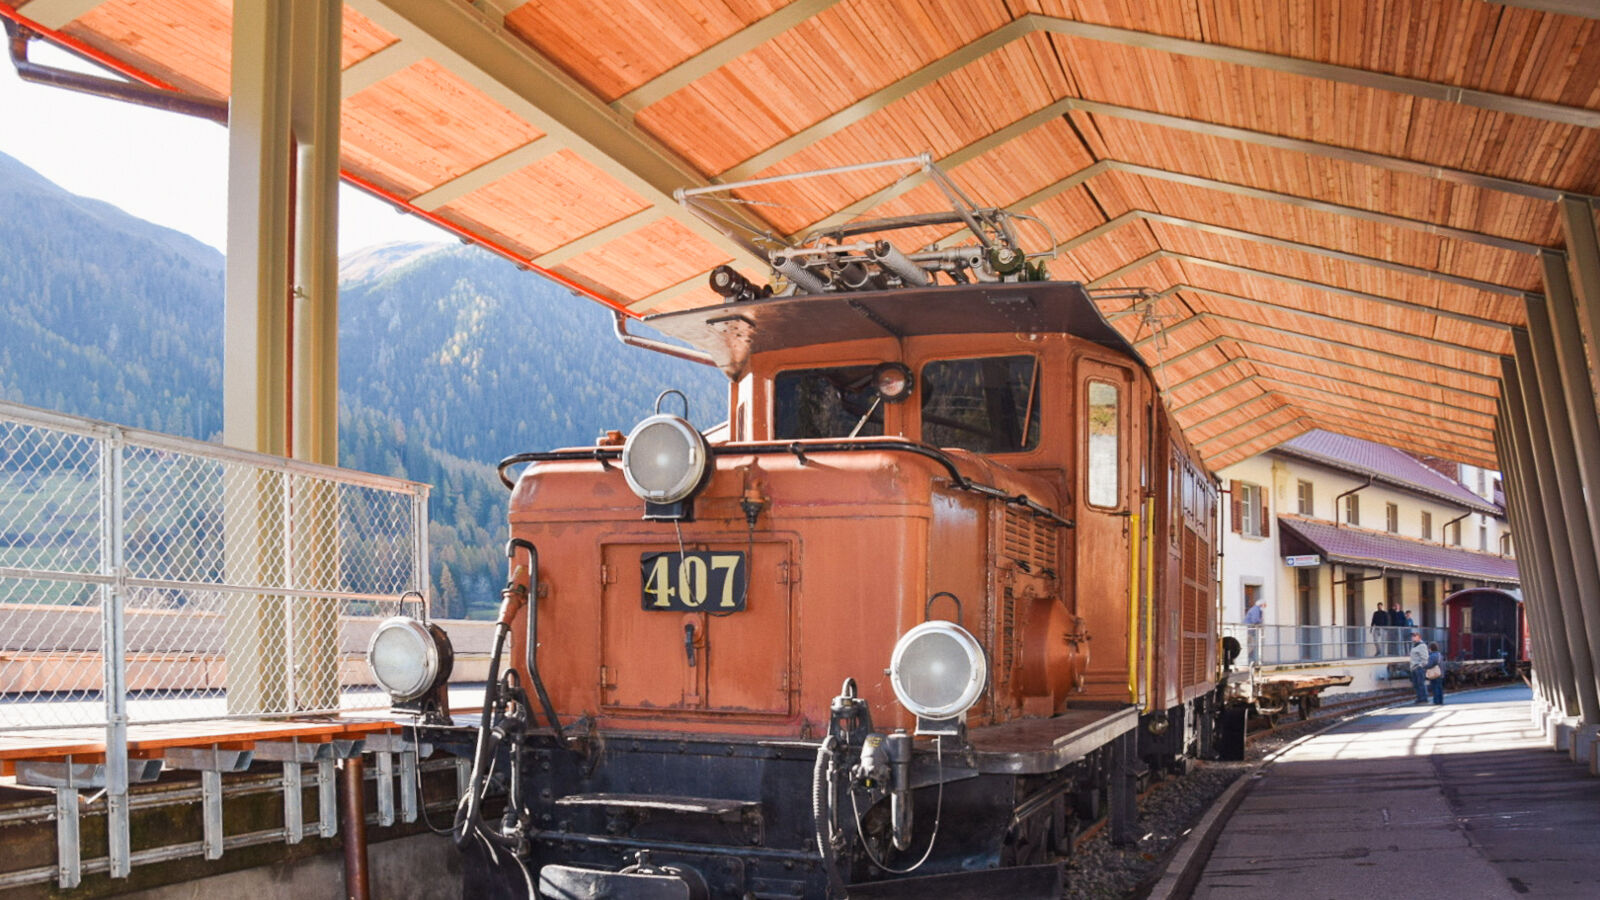 Railway Museum Albula, Bergün